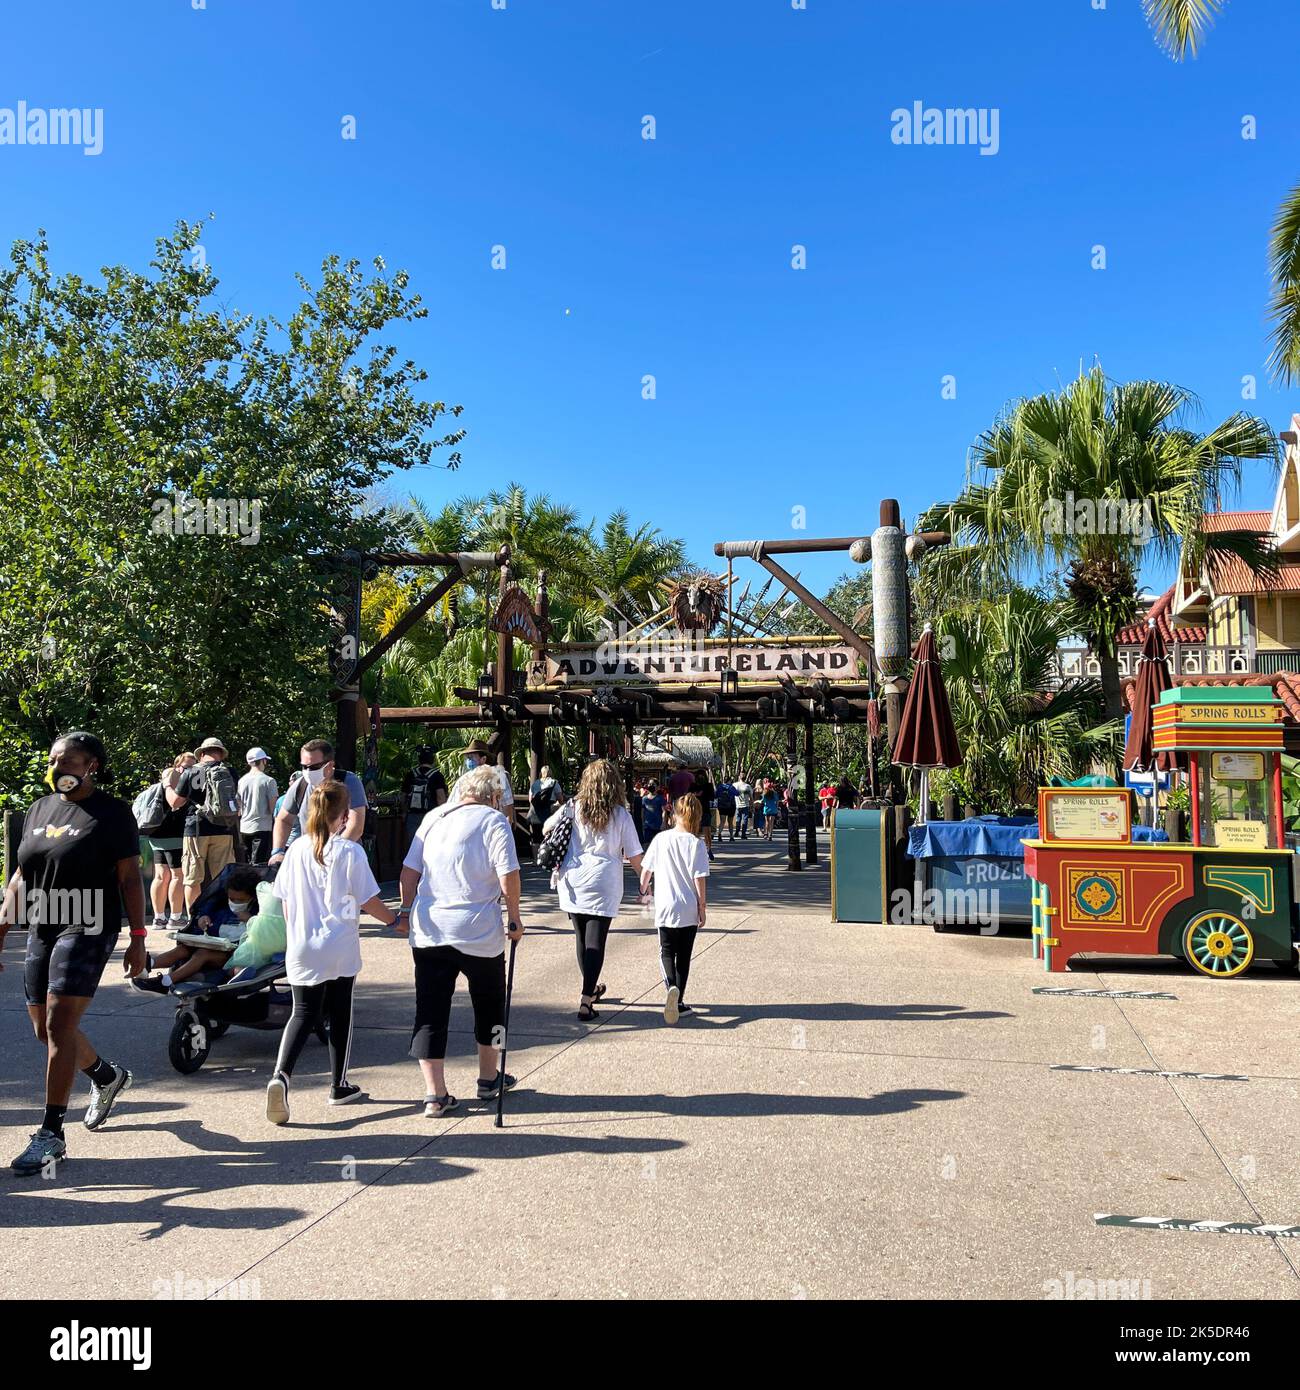 Orlando, FL USA -November 25, 2020:  The entrance to Adventureland in Magic Kingdom at  Walt Disney World  in Orlando, Florida. Stock Photo